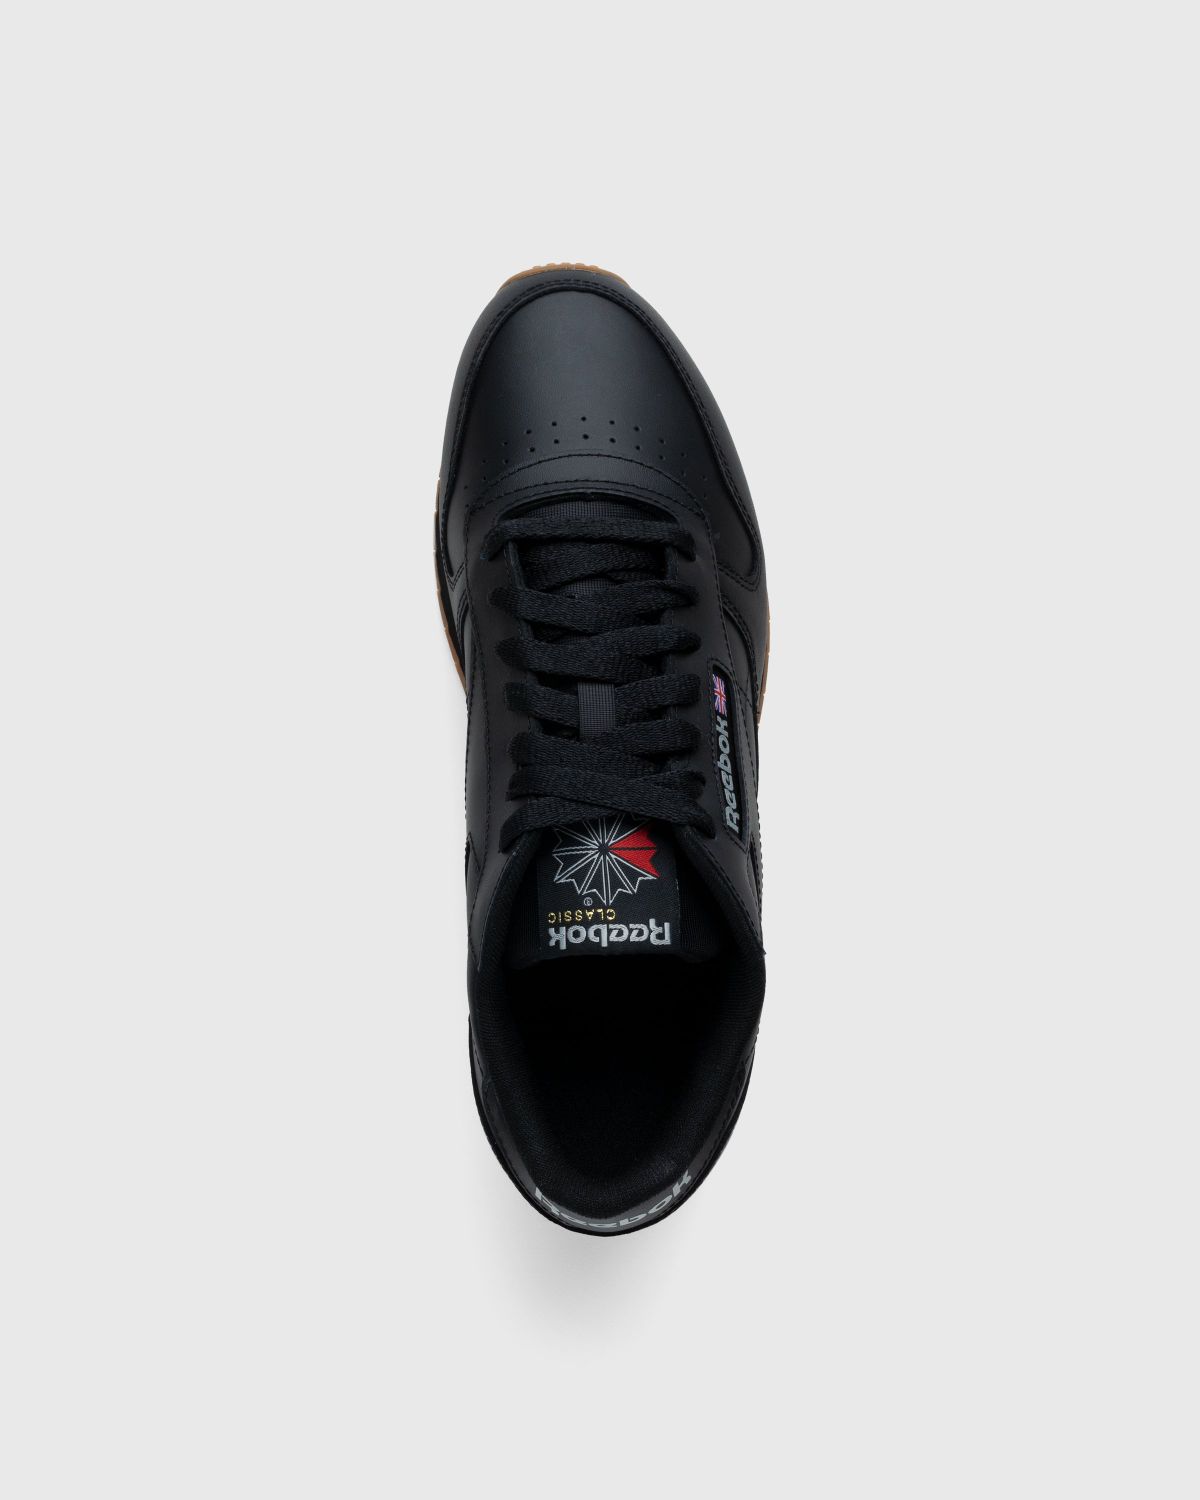 Reebok – Classic Leather Black - Low Top Sneakers - Black - Image 3